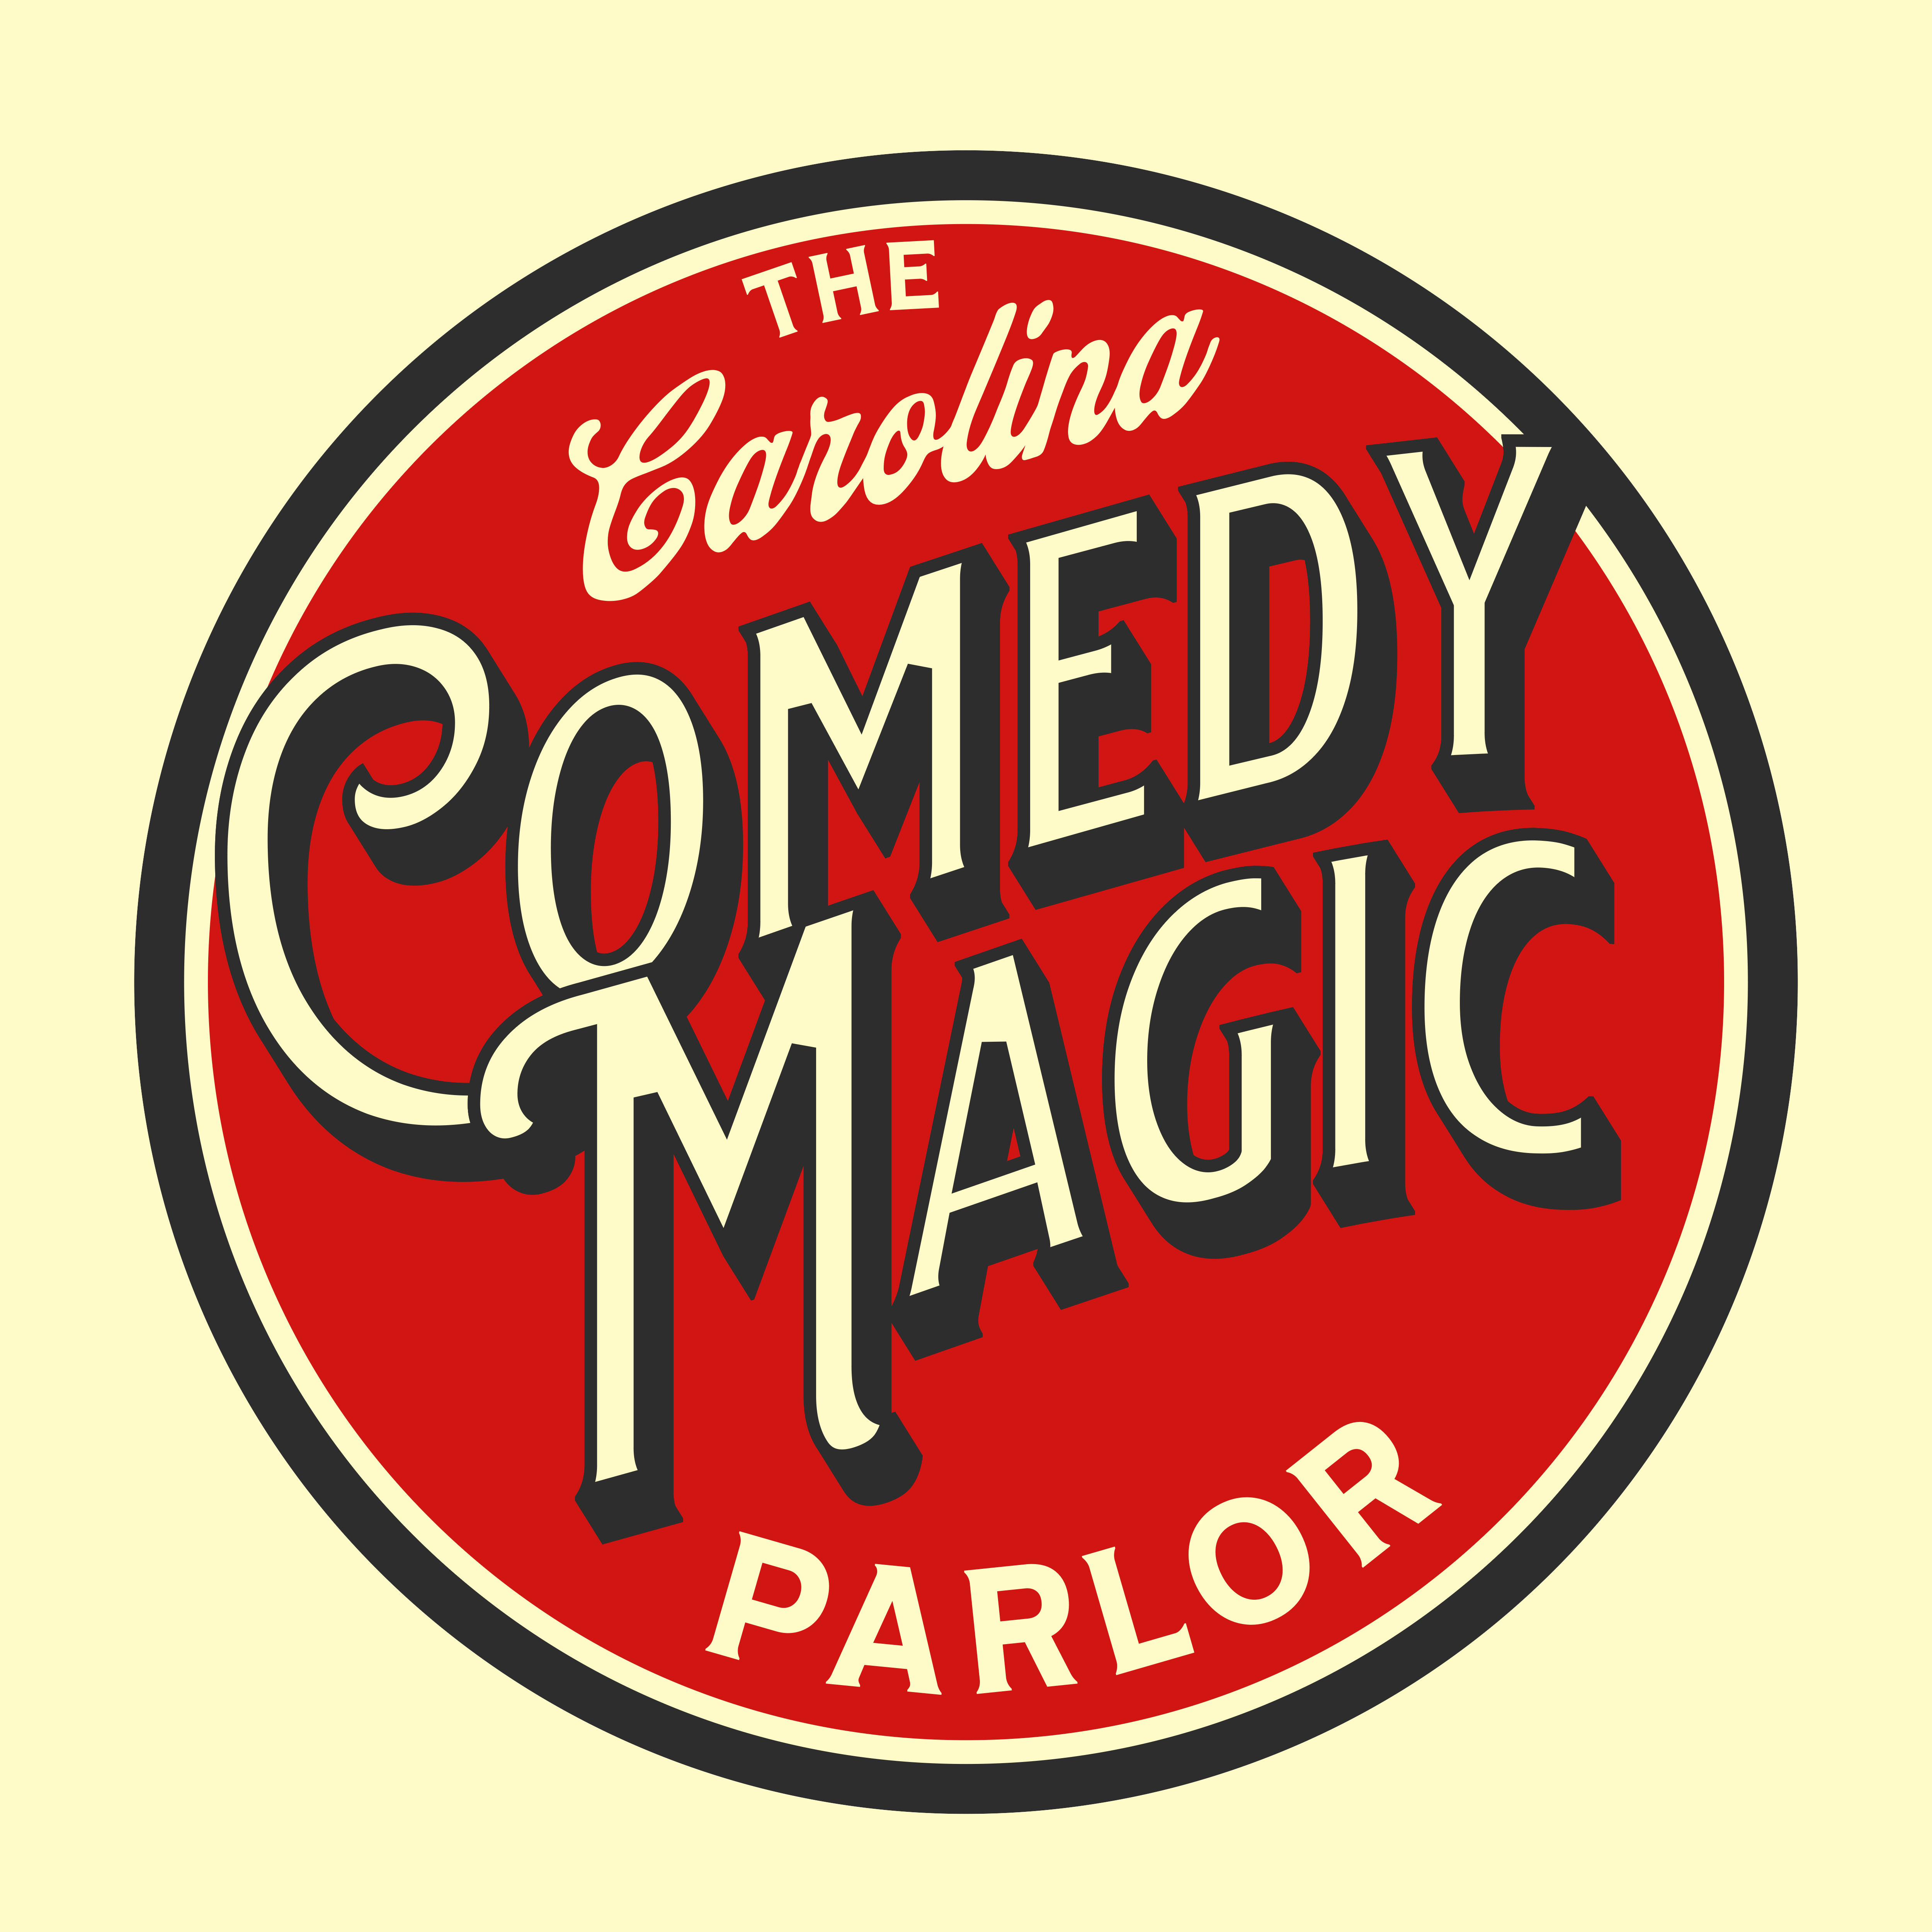 Carolina Comedy Magic Parlor.jpg